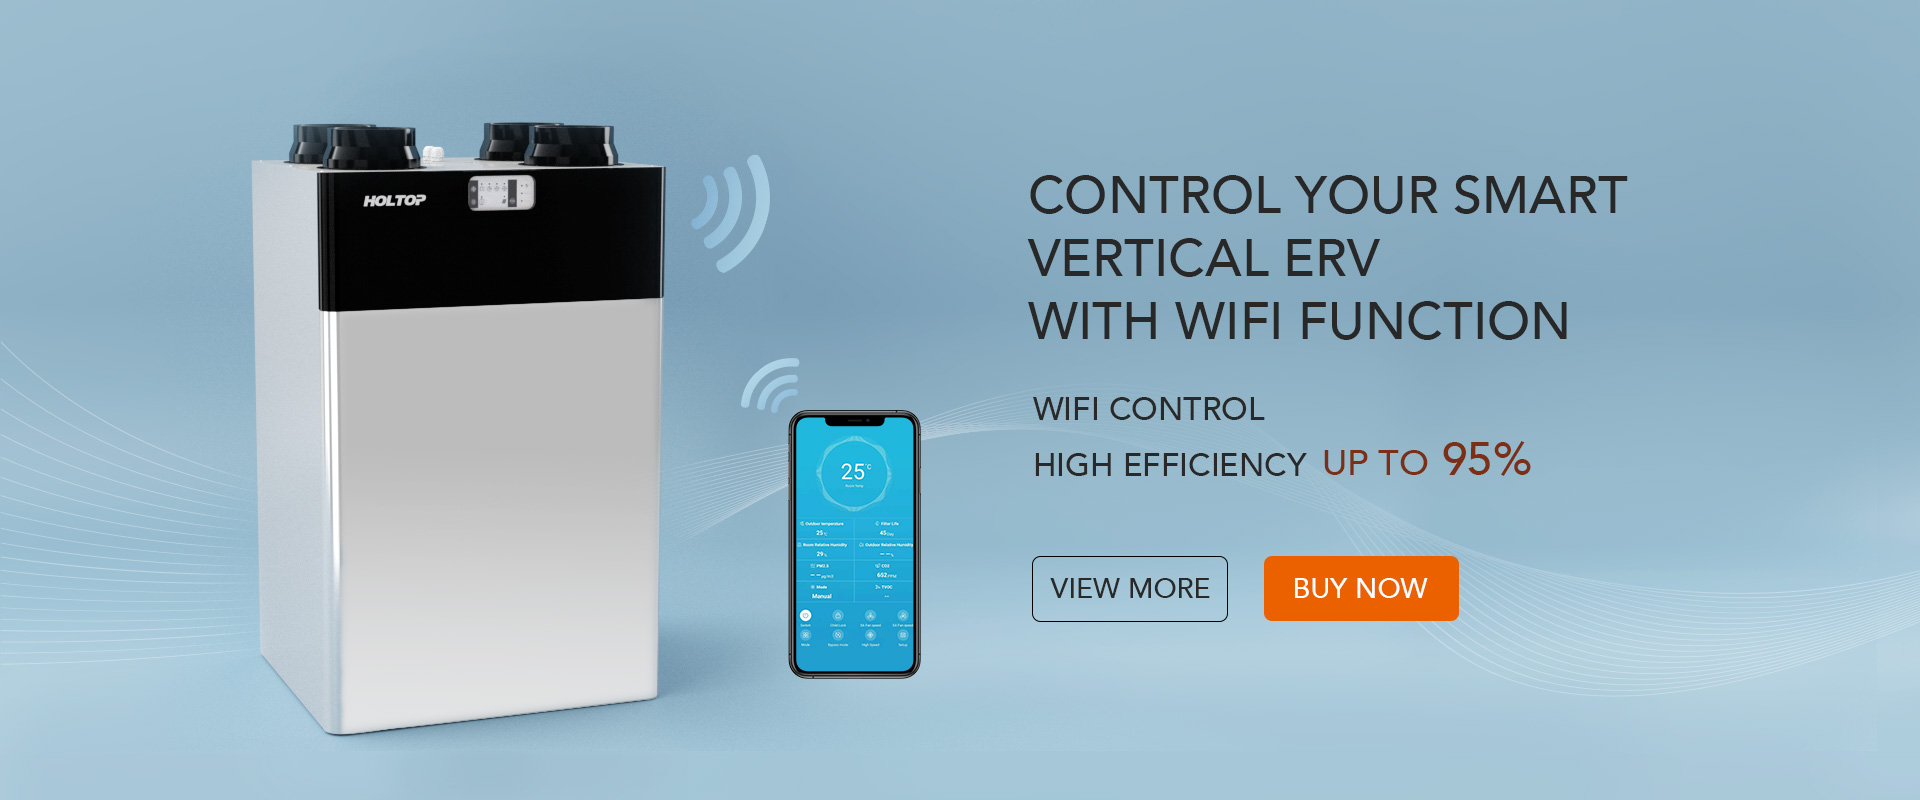 Holtop Upgradovaný Smart Vertical HRV s funkciou WiFi